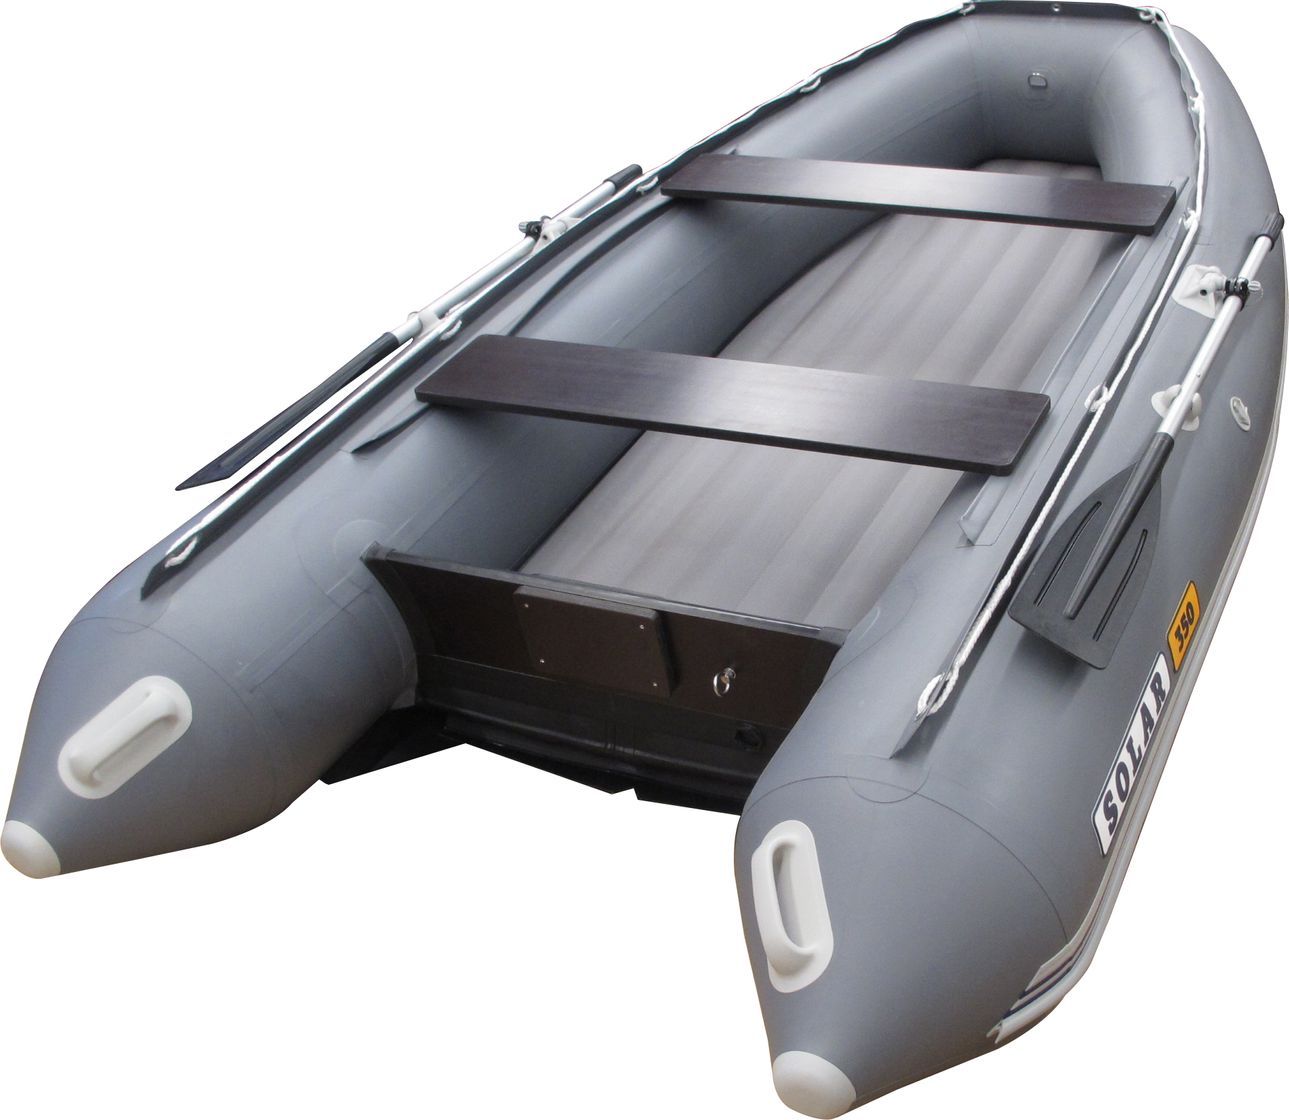 Надувная лодка ПВХ SOLAR-380 К (Максима), серый SLR380k_max_grey надувная лодка пвх выдра 500 jet чульман усиление транца фальшборт серый vdr500jetchg ytf